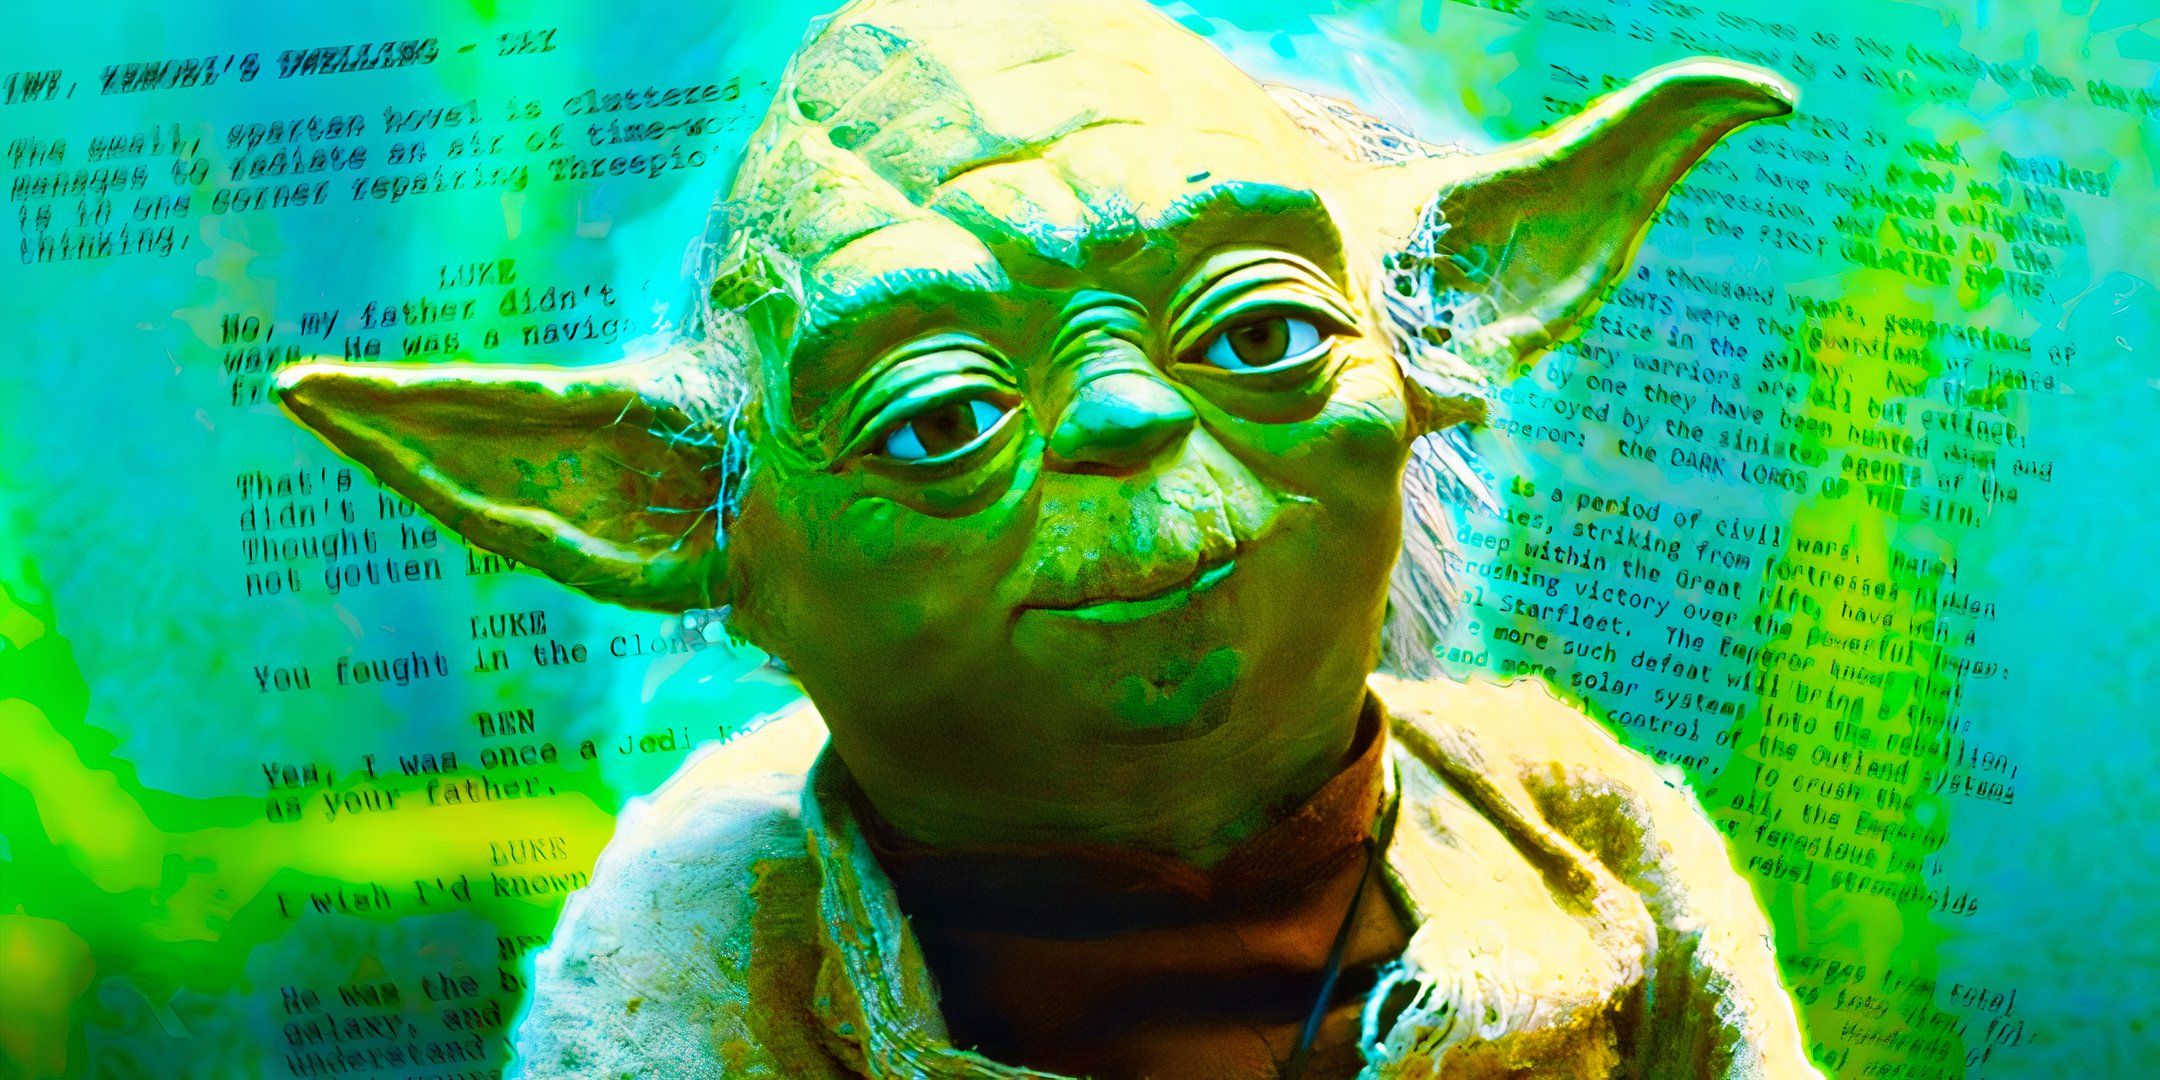 Why Does Yoda Talk So Strangely In Star Wars?